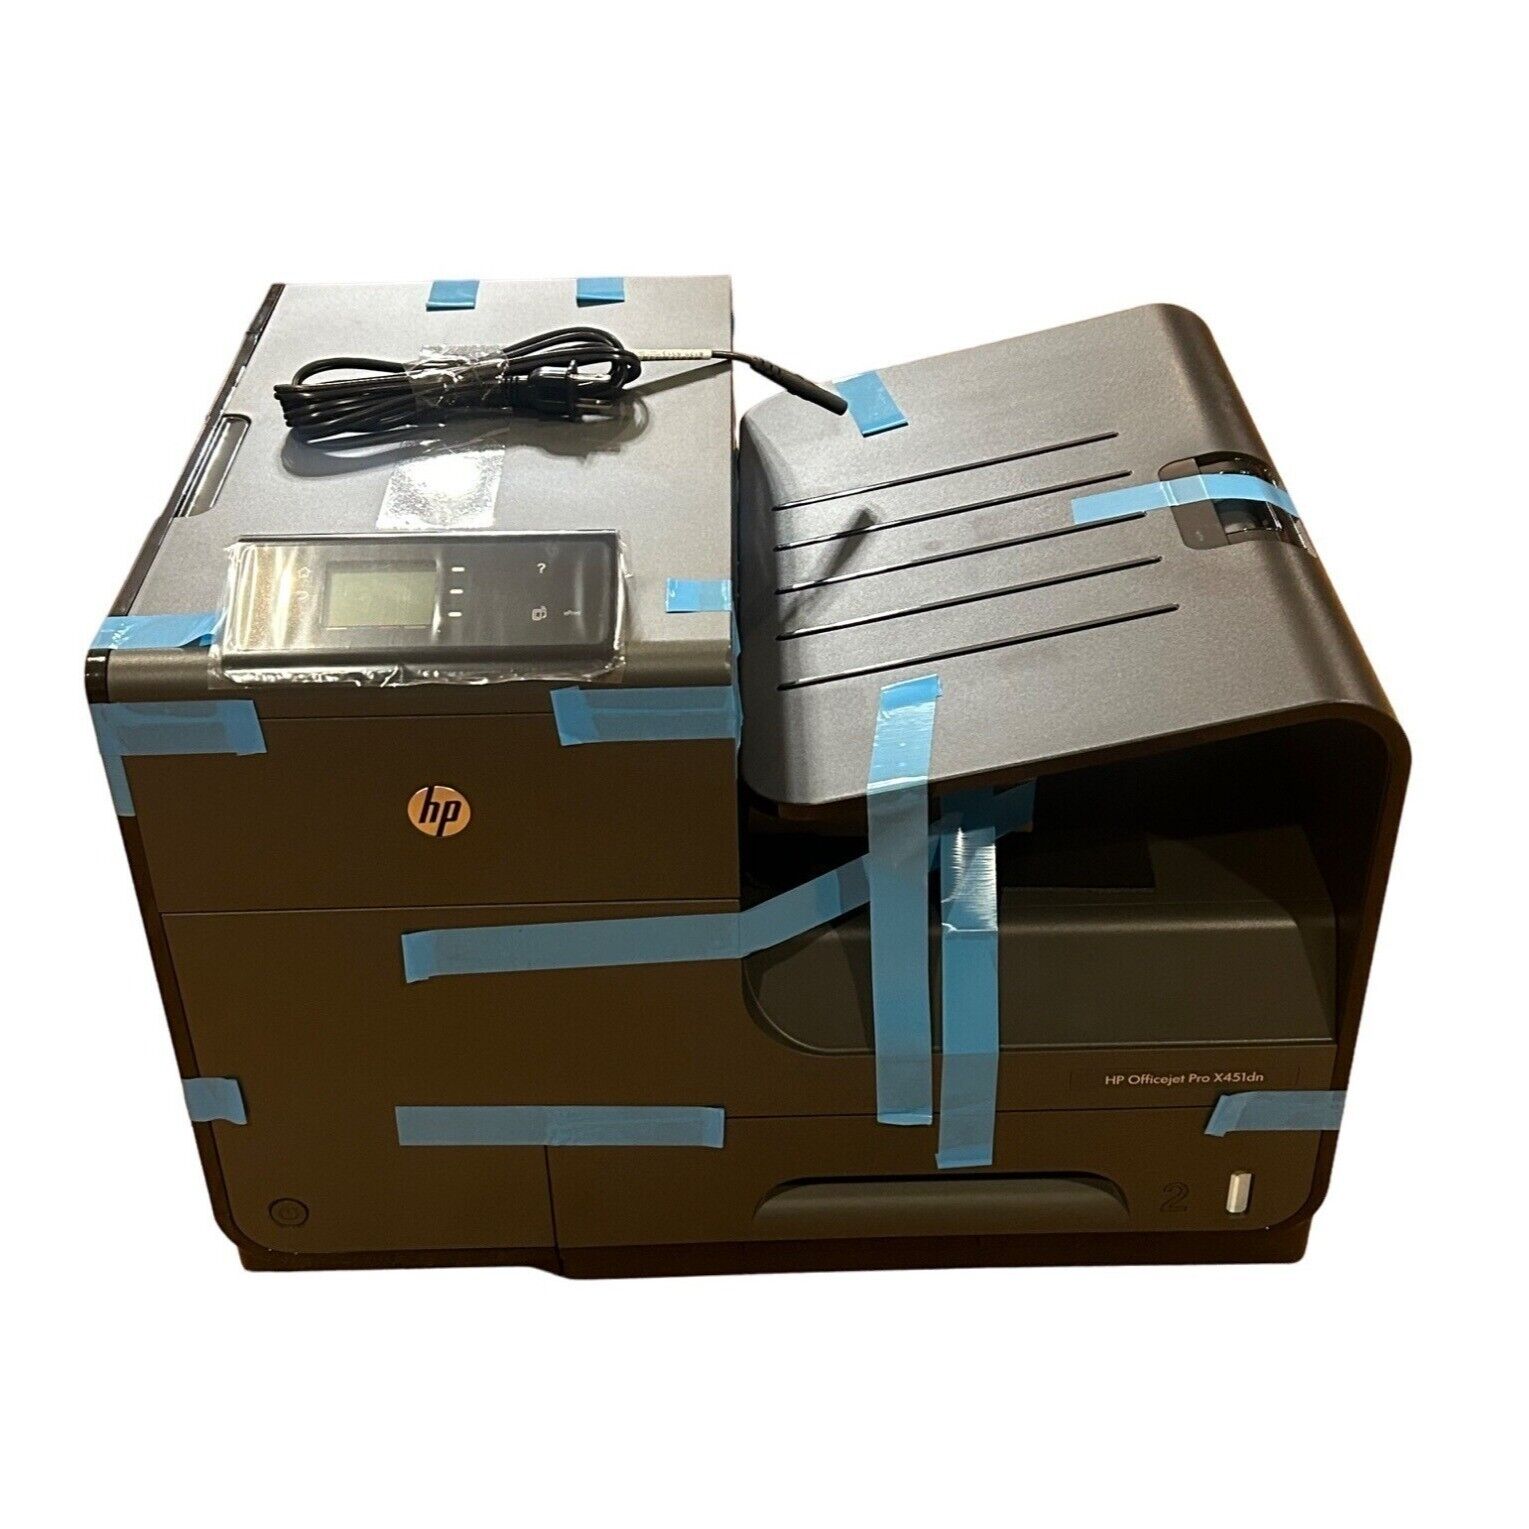 HP Officejet Pro X451dn Inkjet Printer CN459A Brand New Without Box